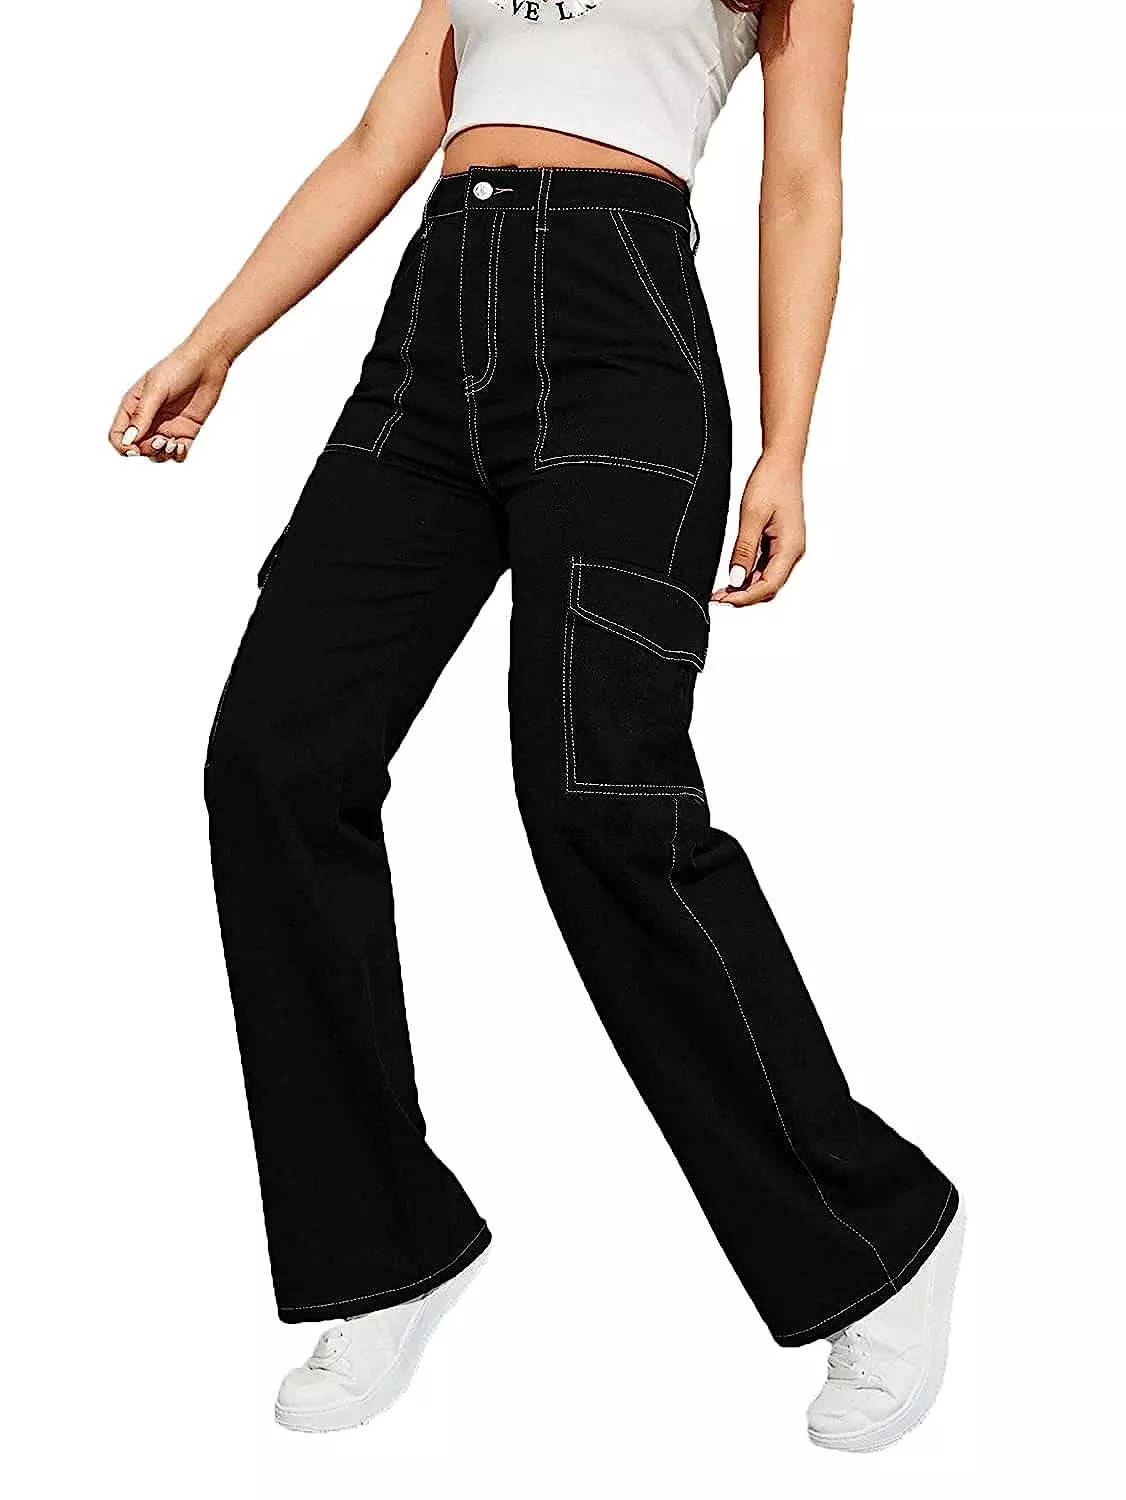 Black Cargo Pants For Women: 6 Stylish Black Cargo Pants For Women For A  Chic Casual Look - The Economic Times